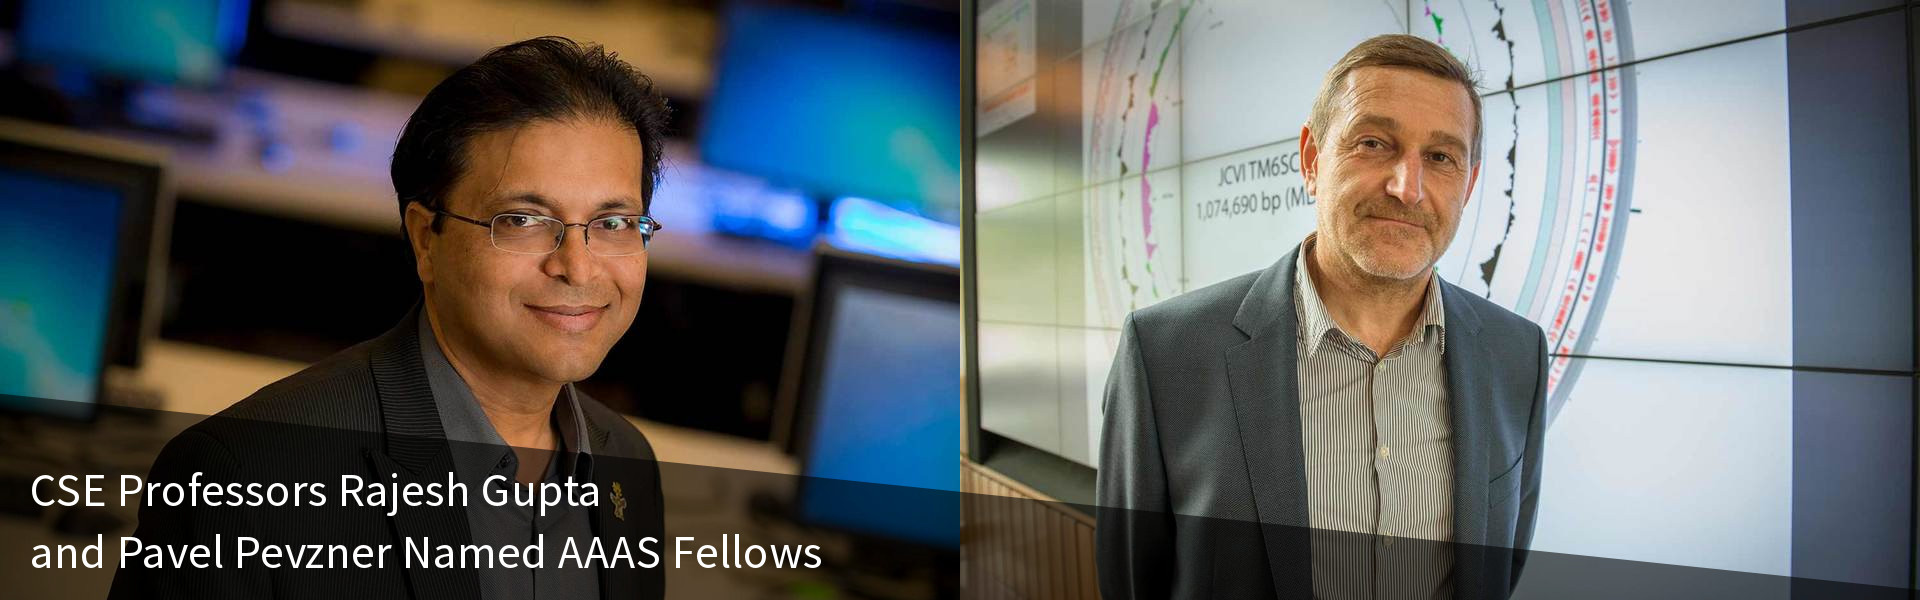 CSE Professors Rajesh Gupta and Pavel Pevzner Named AAAS Fellows